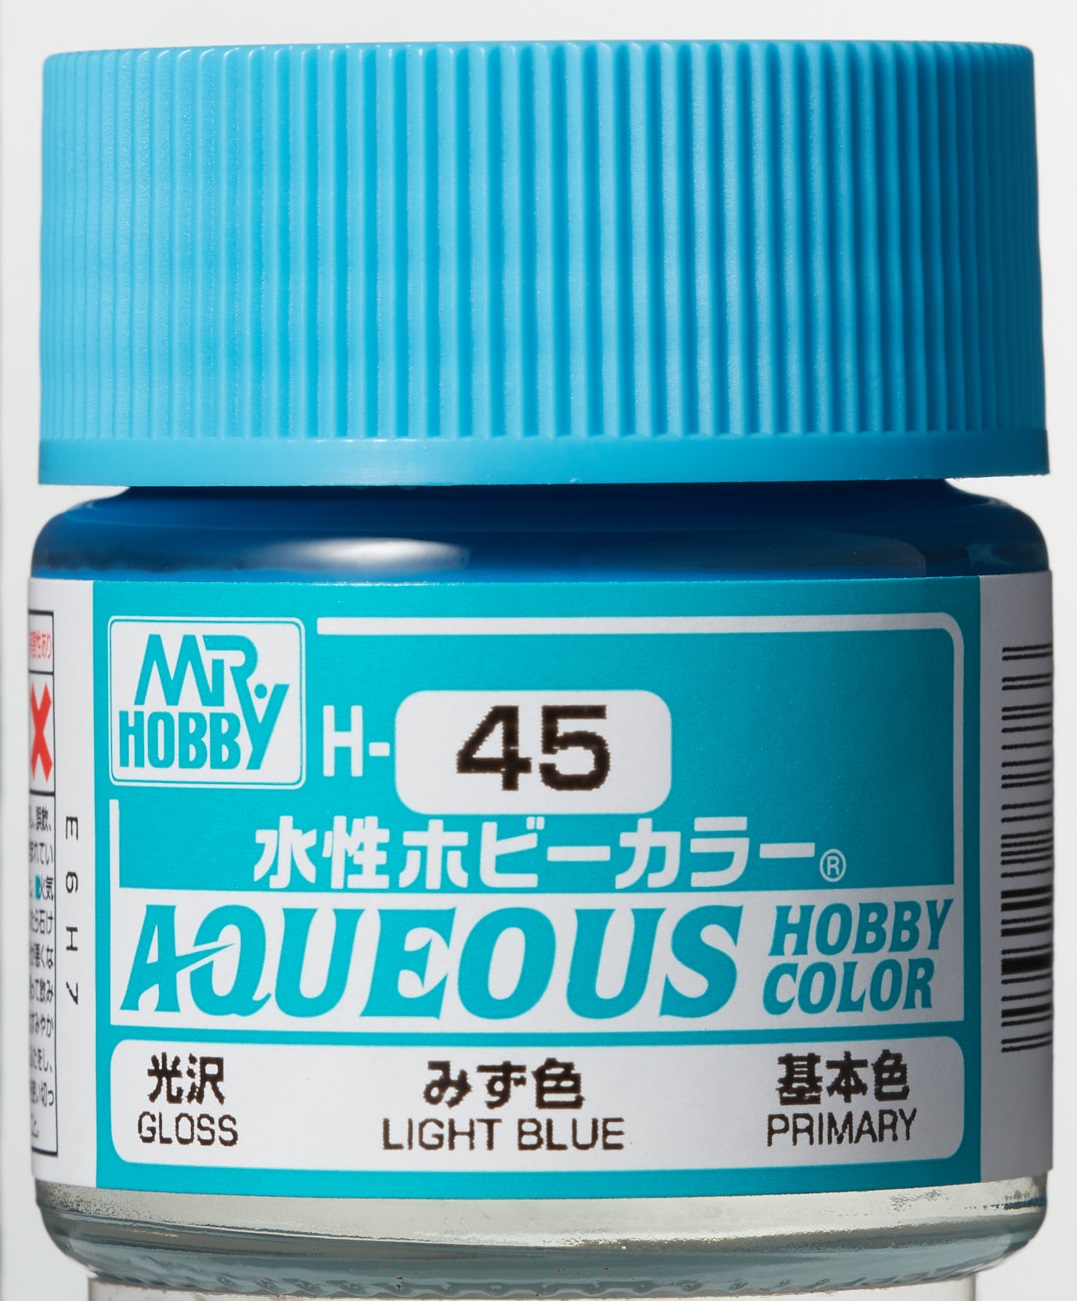 Mr. Aqueous Hobby Color - Light Blue - H45 - Hellblau